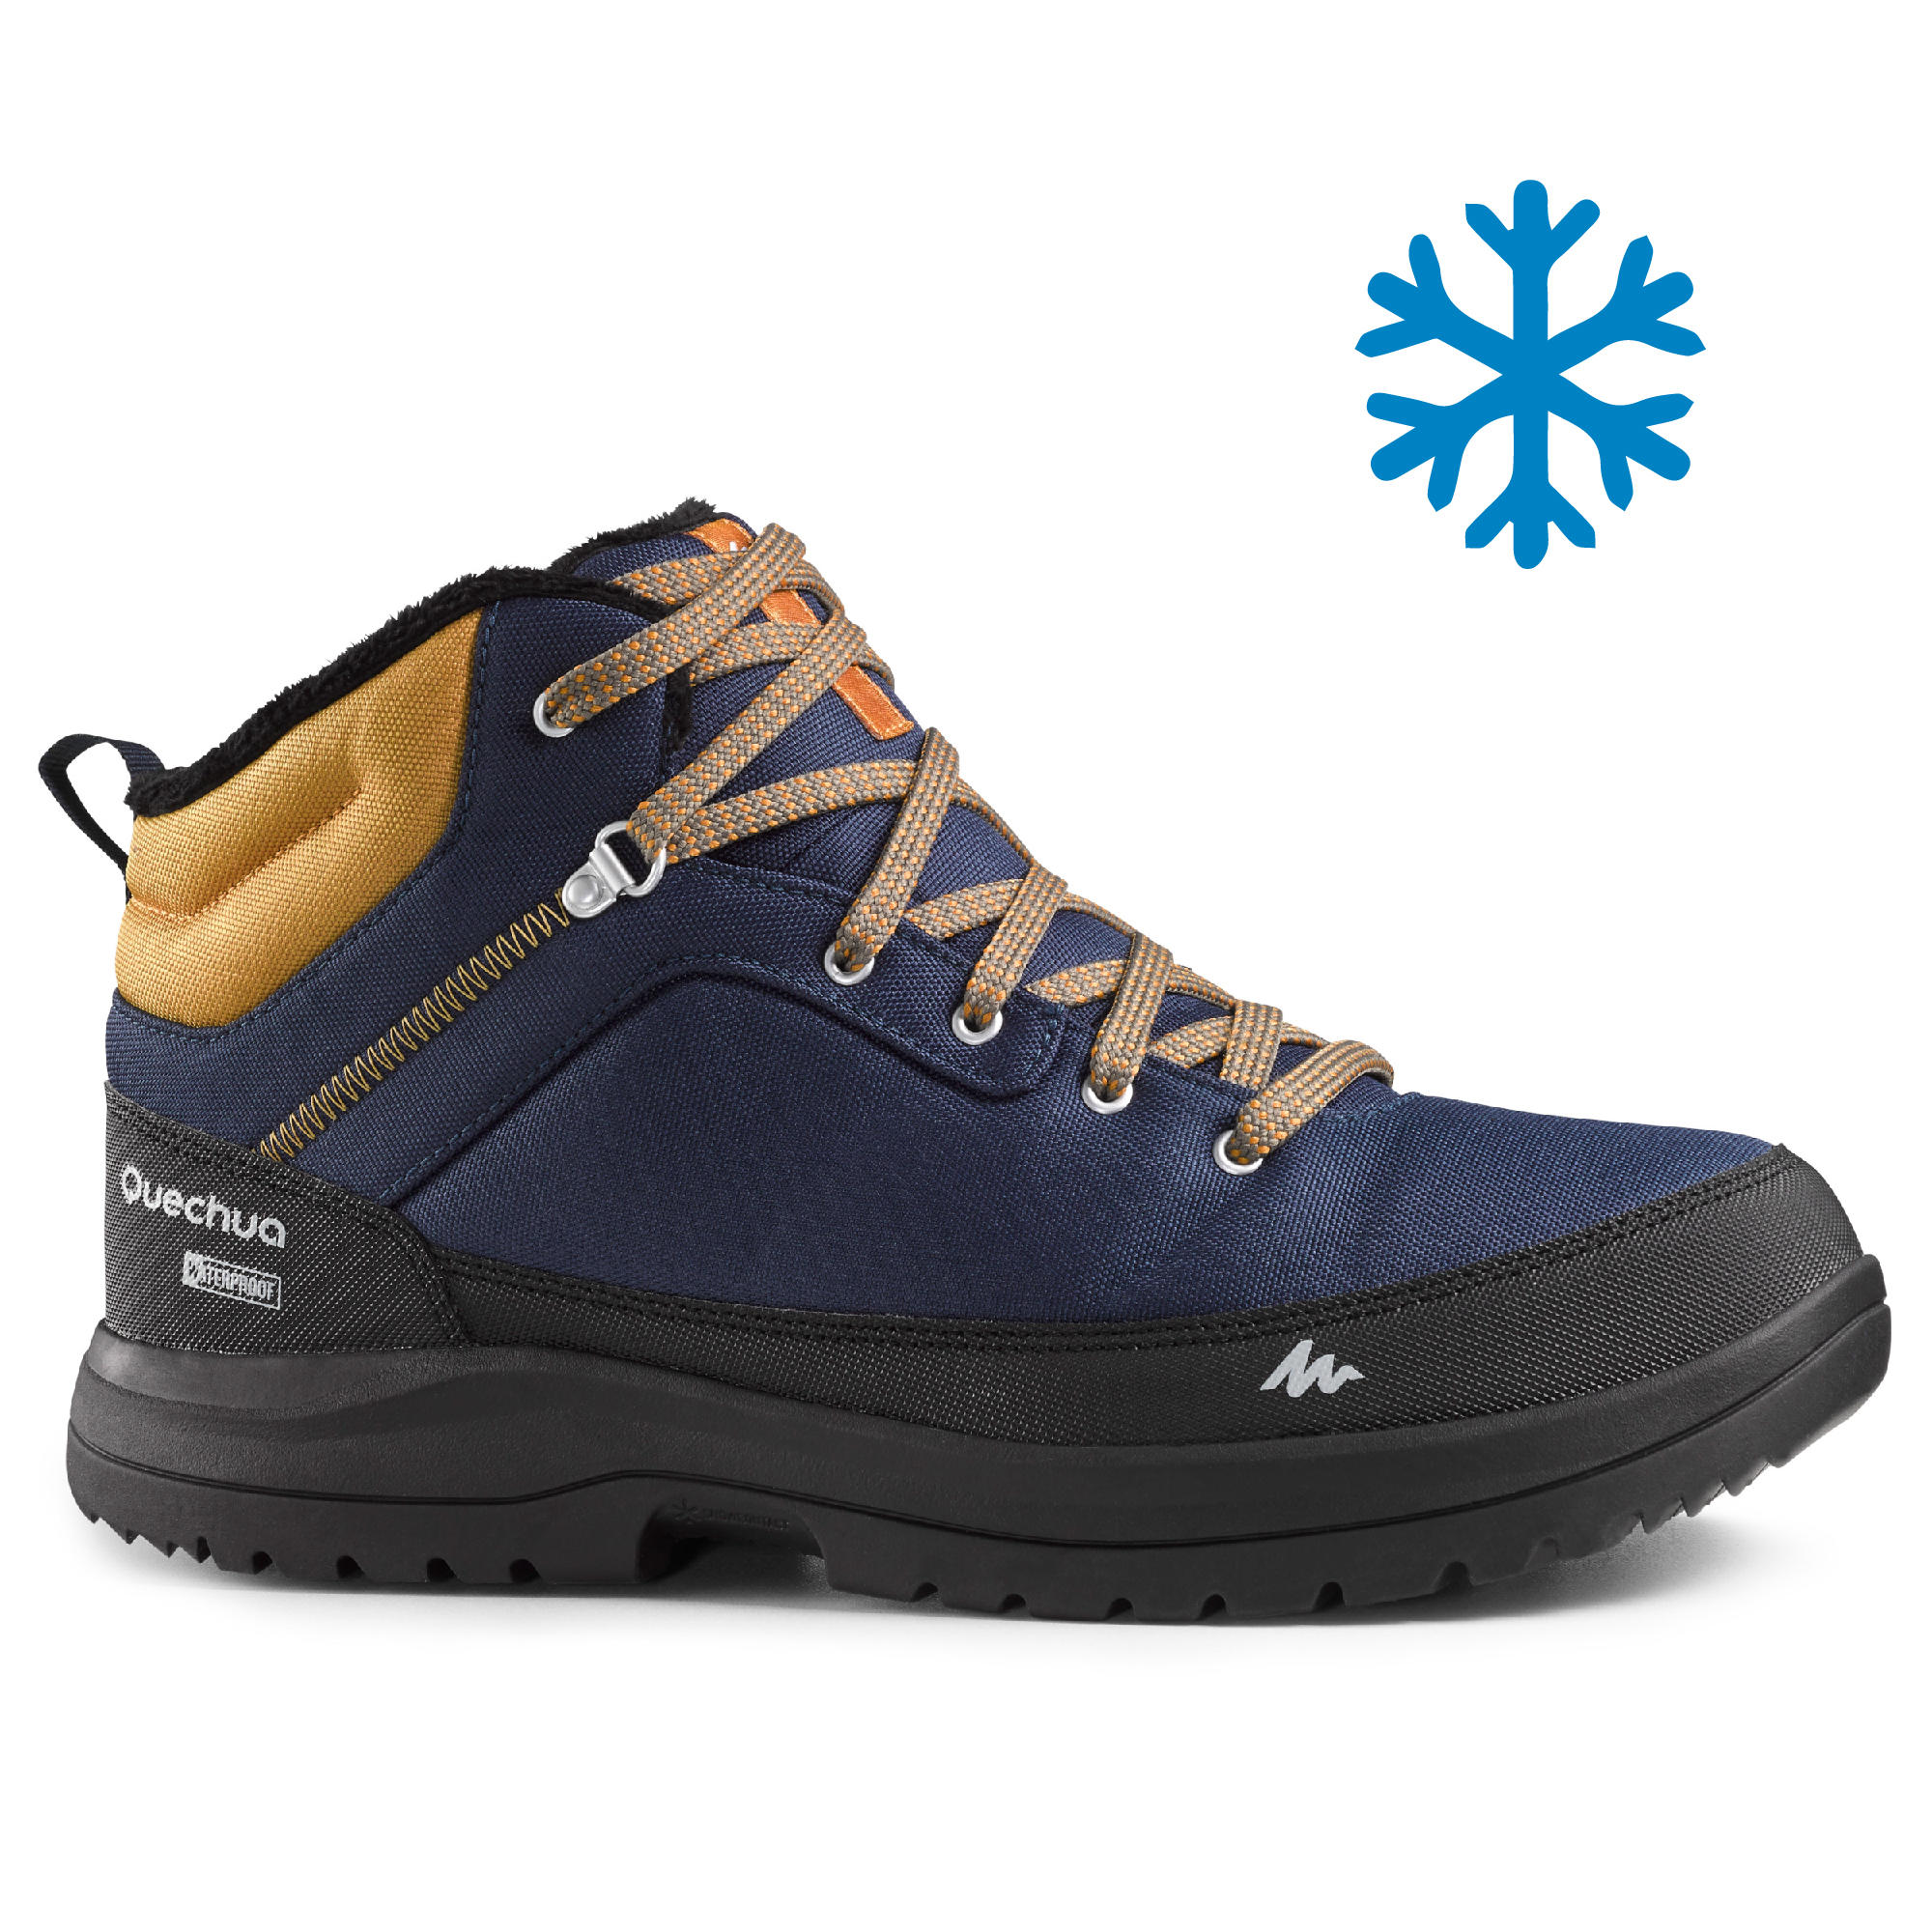 SH100 Quechua Snow Hiking Shoes